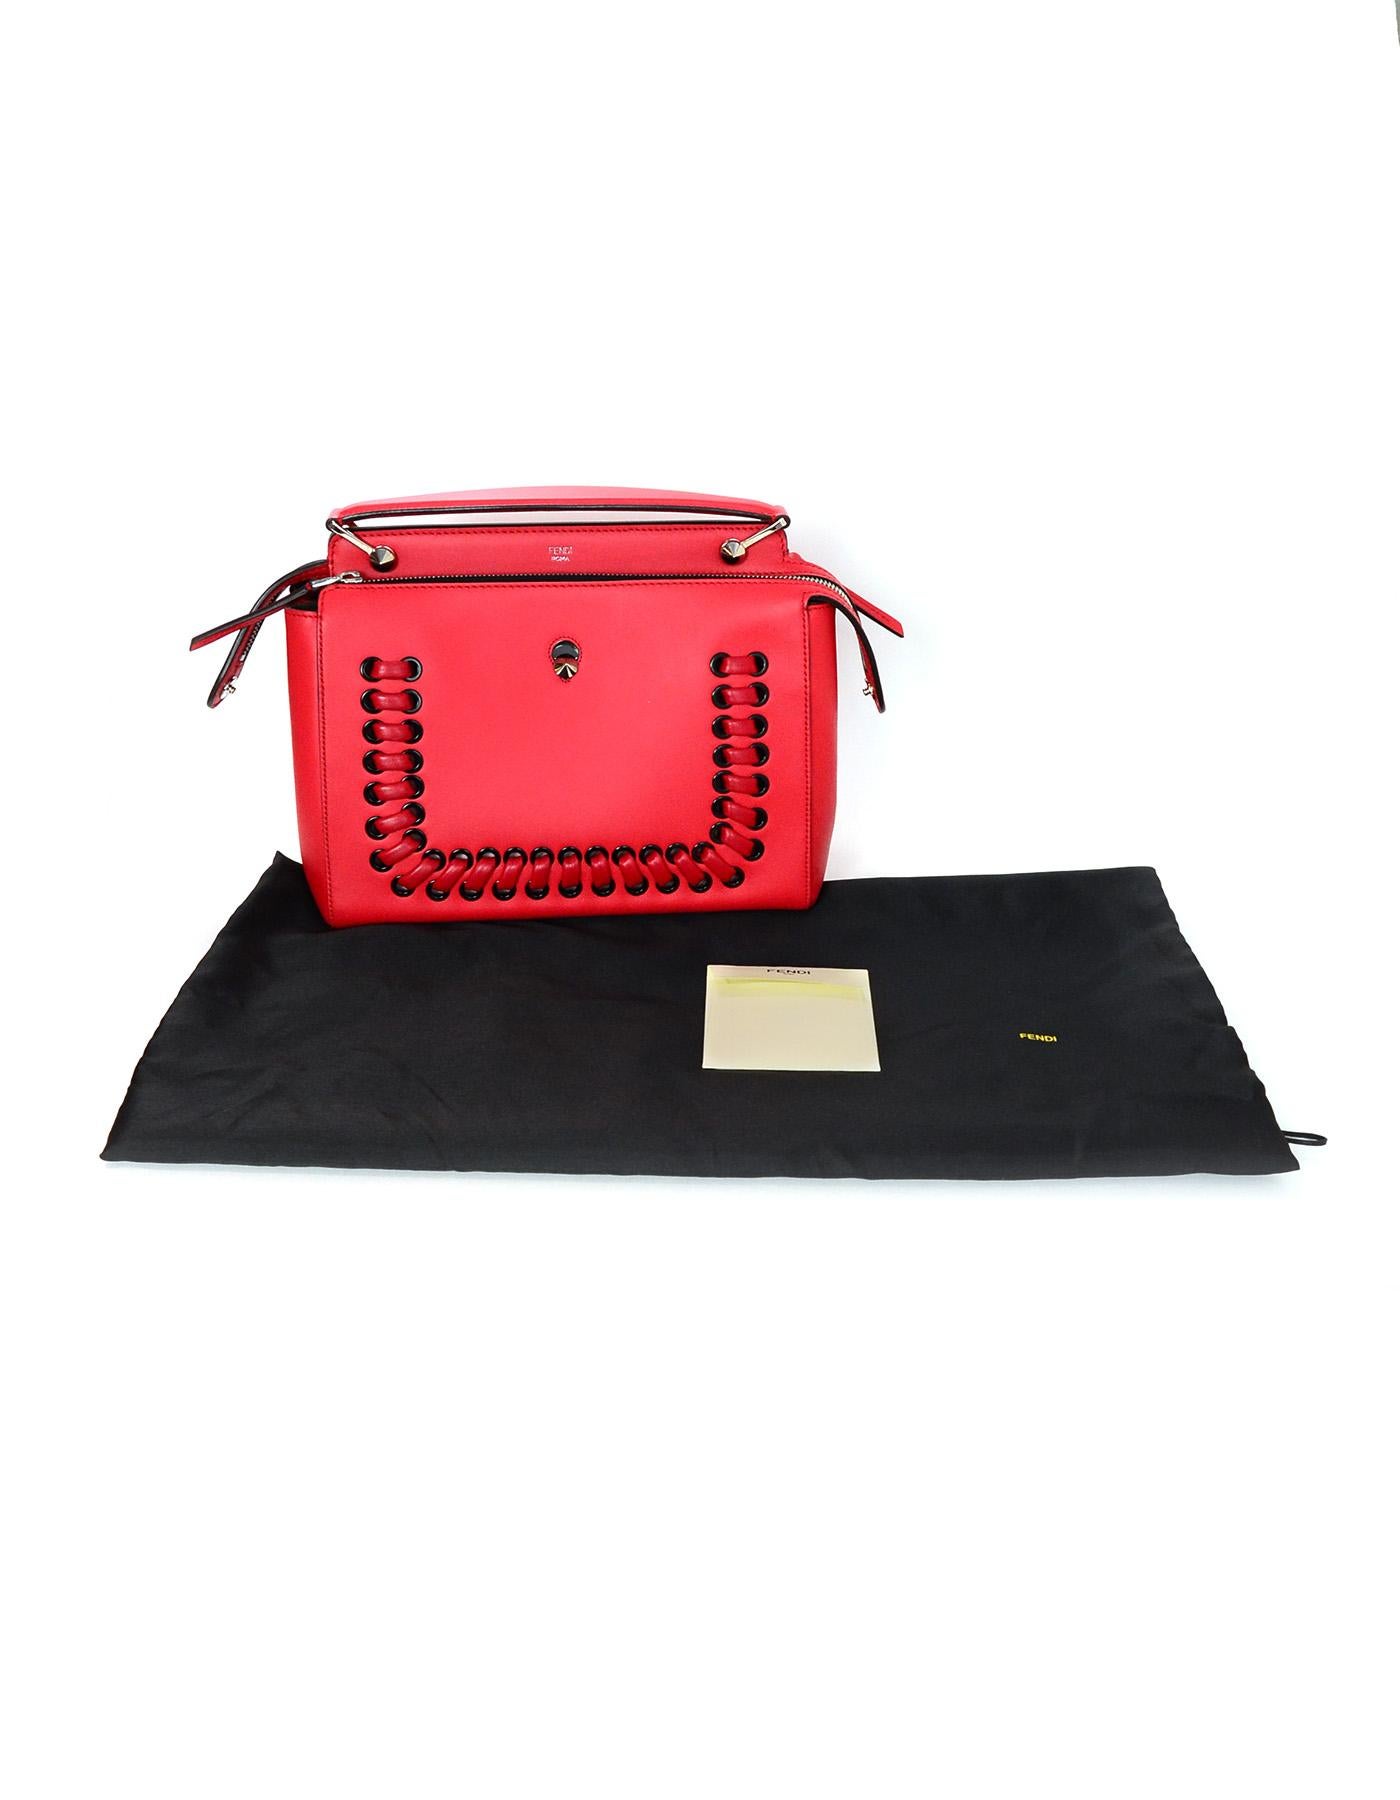 Fendi Red Nappa Leather Whipstitch Fashion Show Dotcom Satchel Bag w/ Strap 10